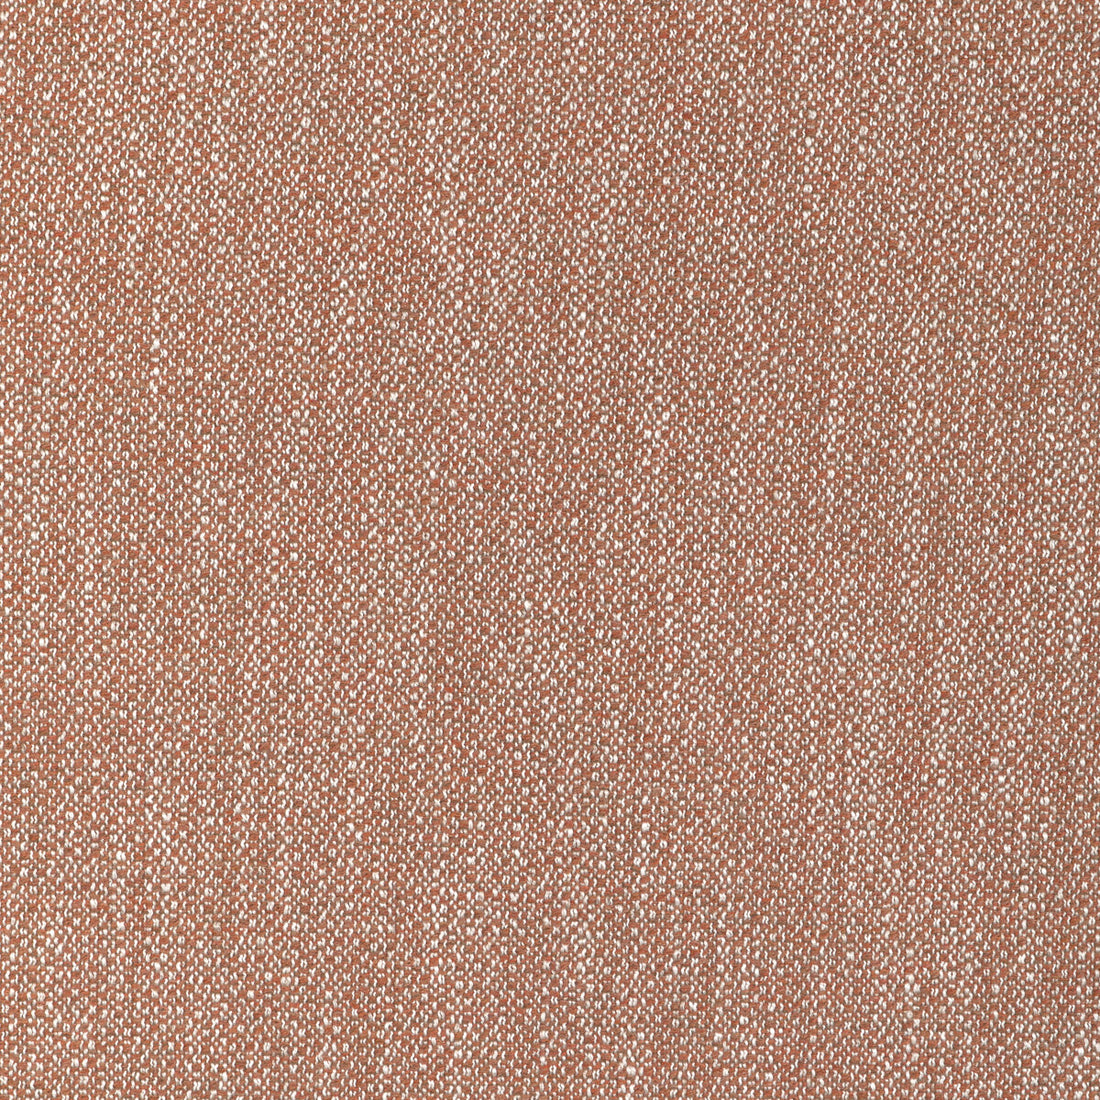 Torus fabric in terracotta color - pattern GWF-3793.2416.0 - by Lee Jofa Modern in the Kelly Wearstler VIII collection